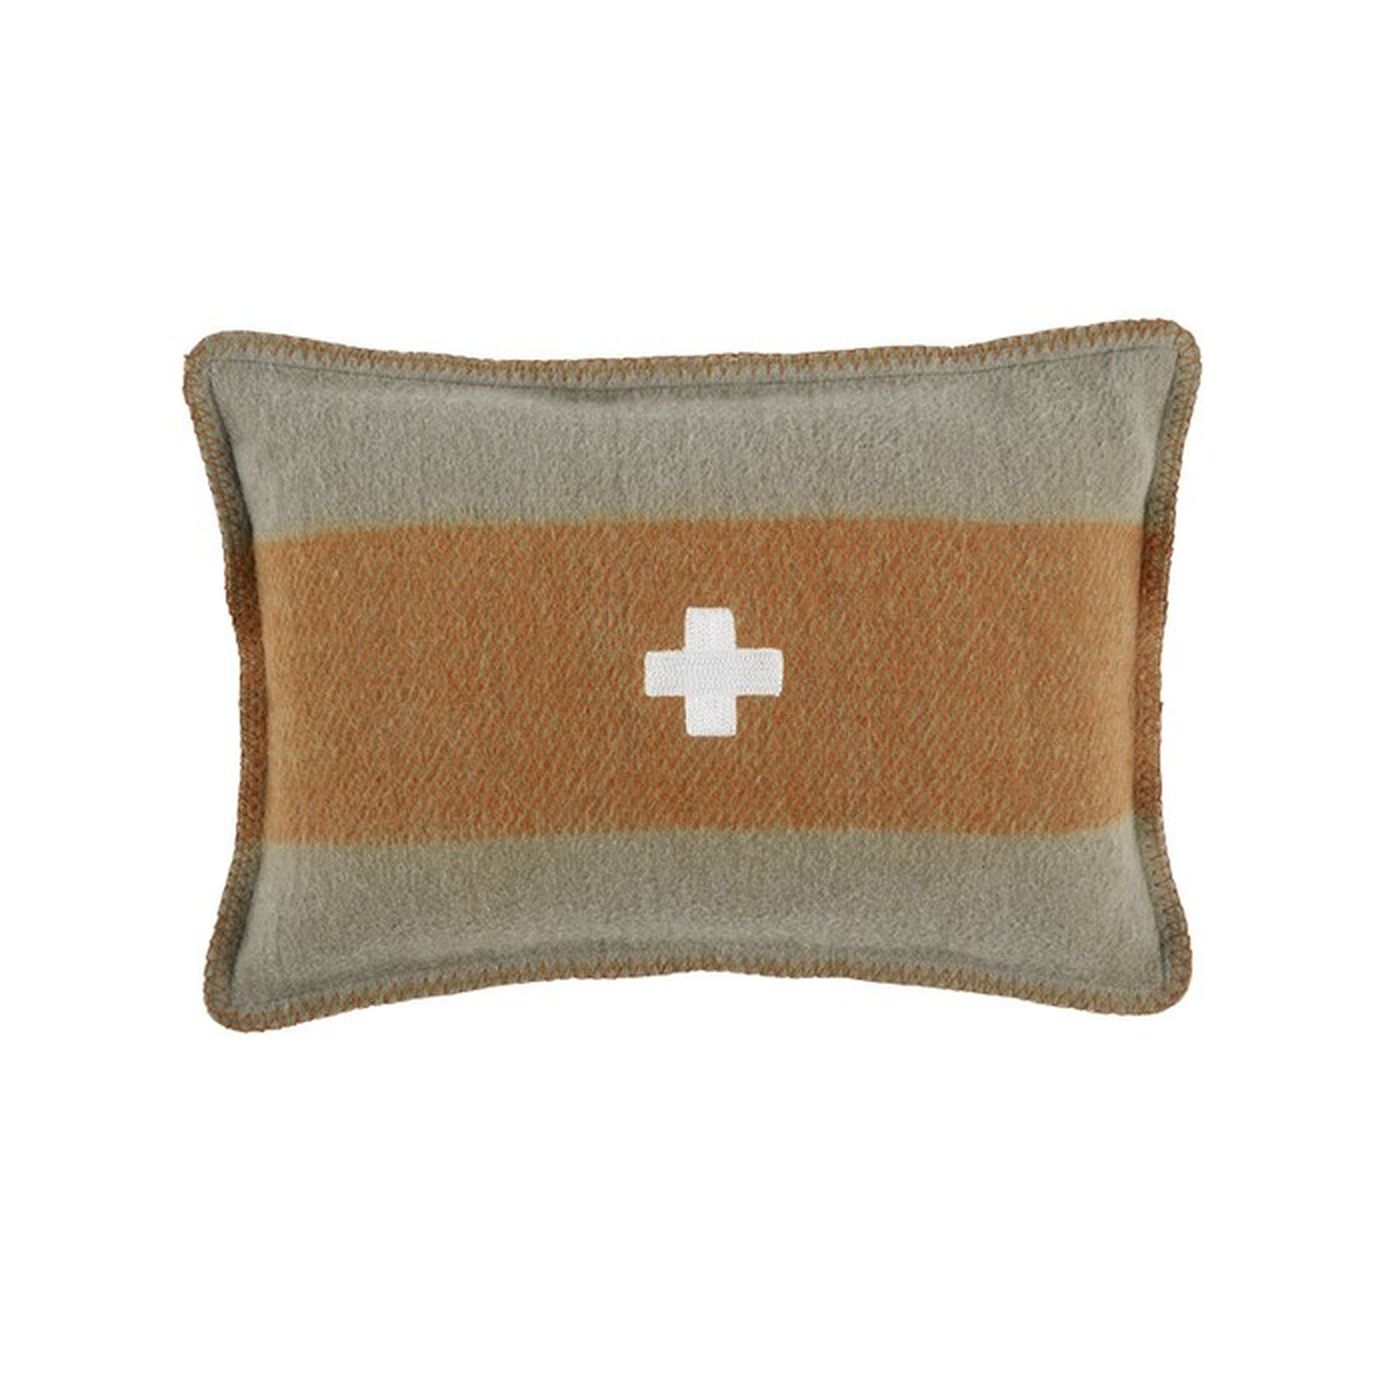 Swiss Army Wool Throw Pillow - Image 0